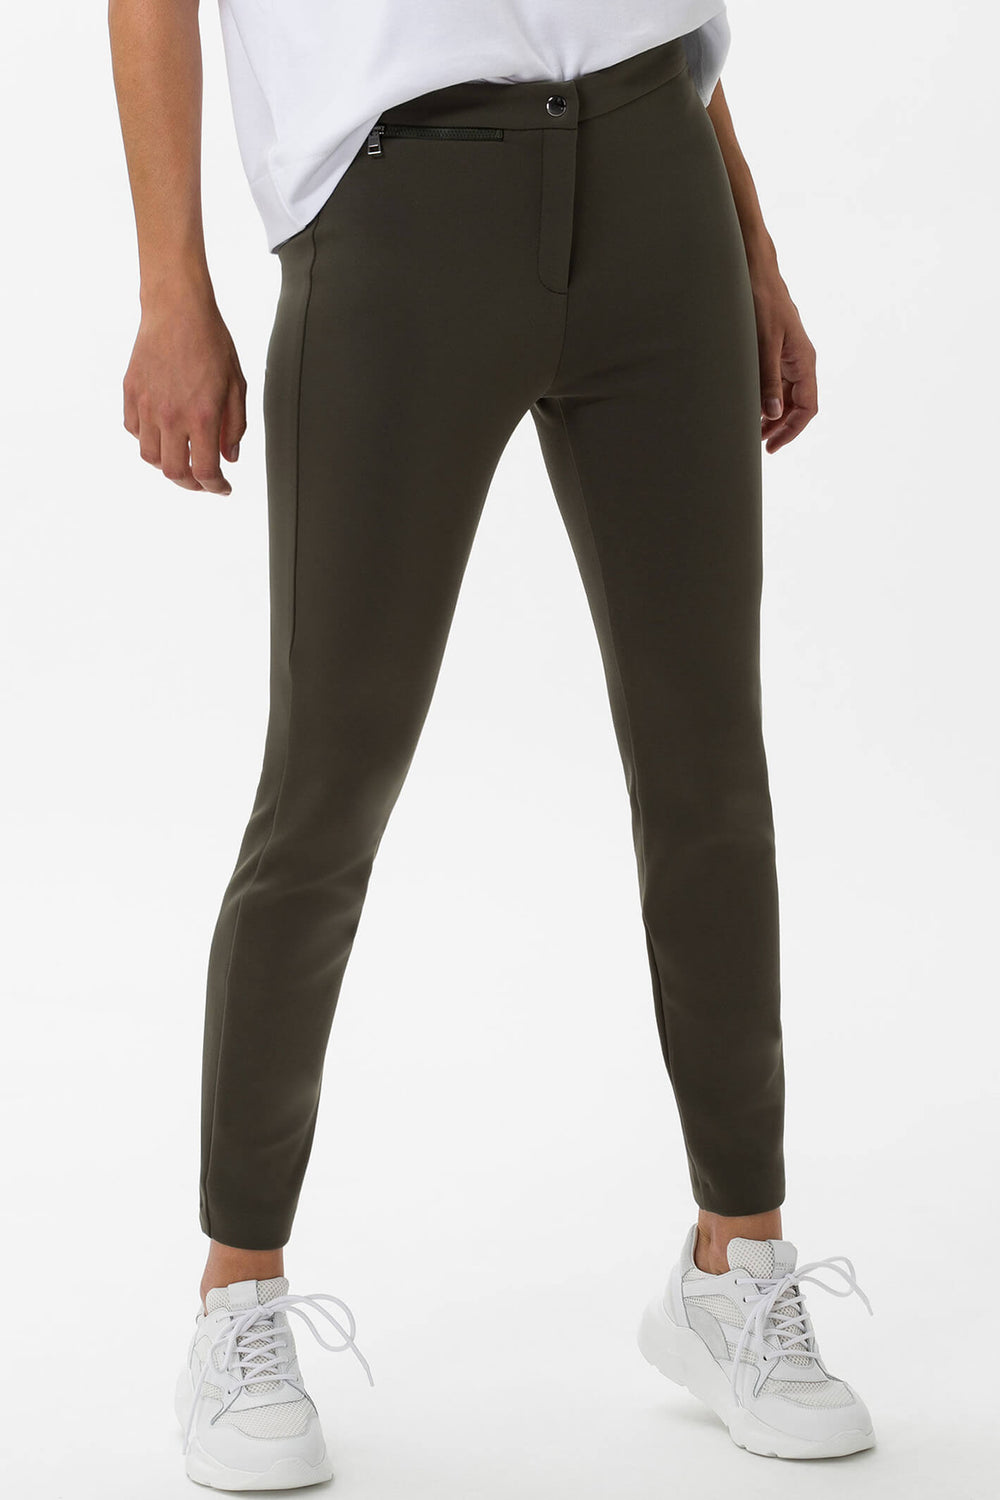 Brax 75-5354 32 Dark Olive Lou Slim Fit Trousers - Olivia Grace Fashion